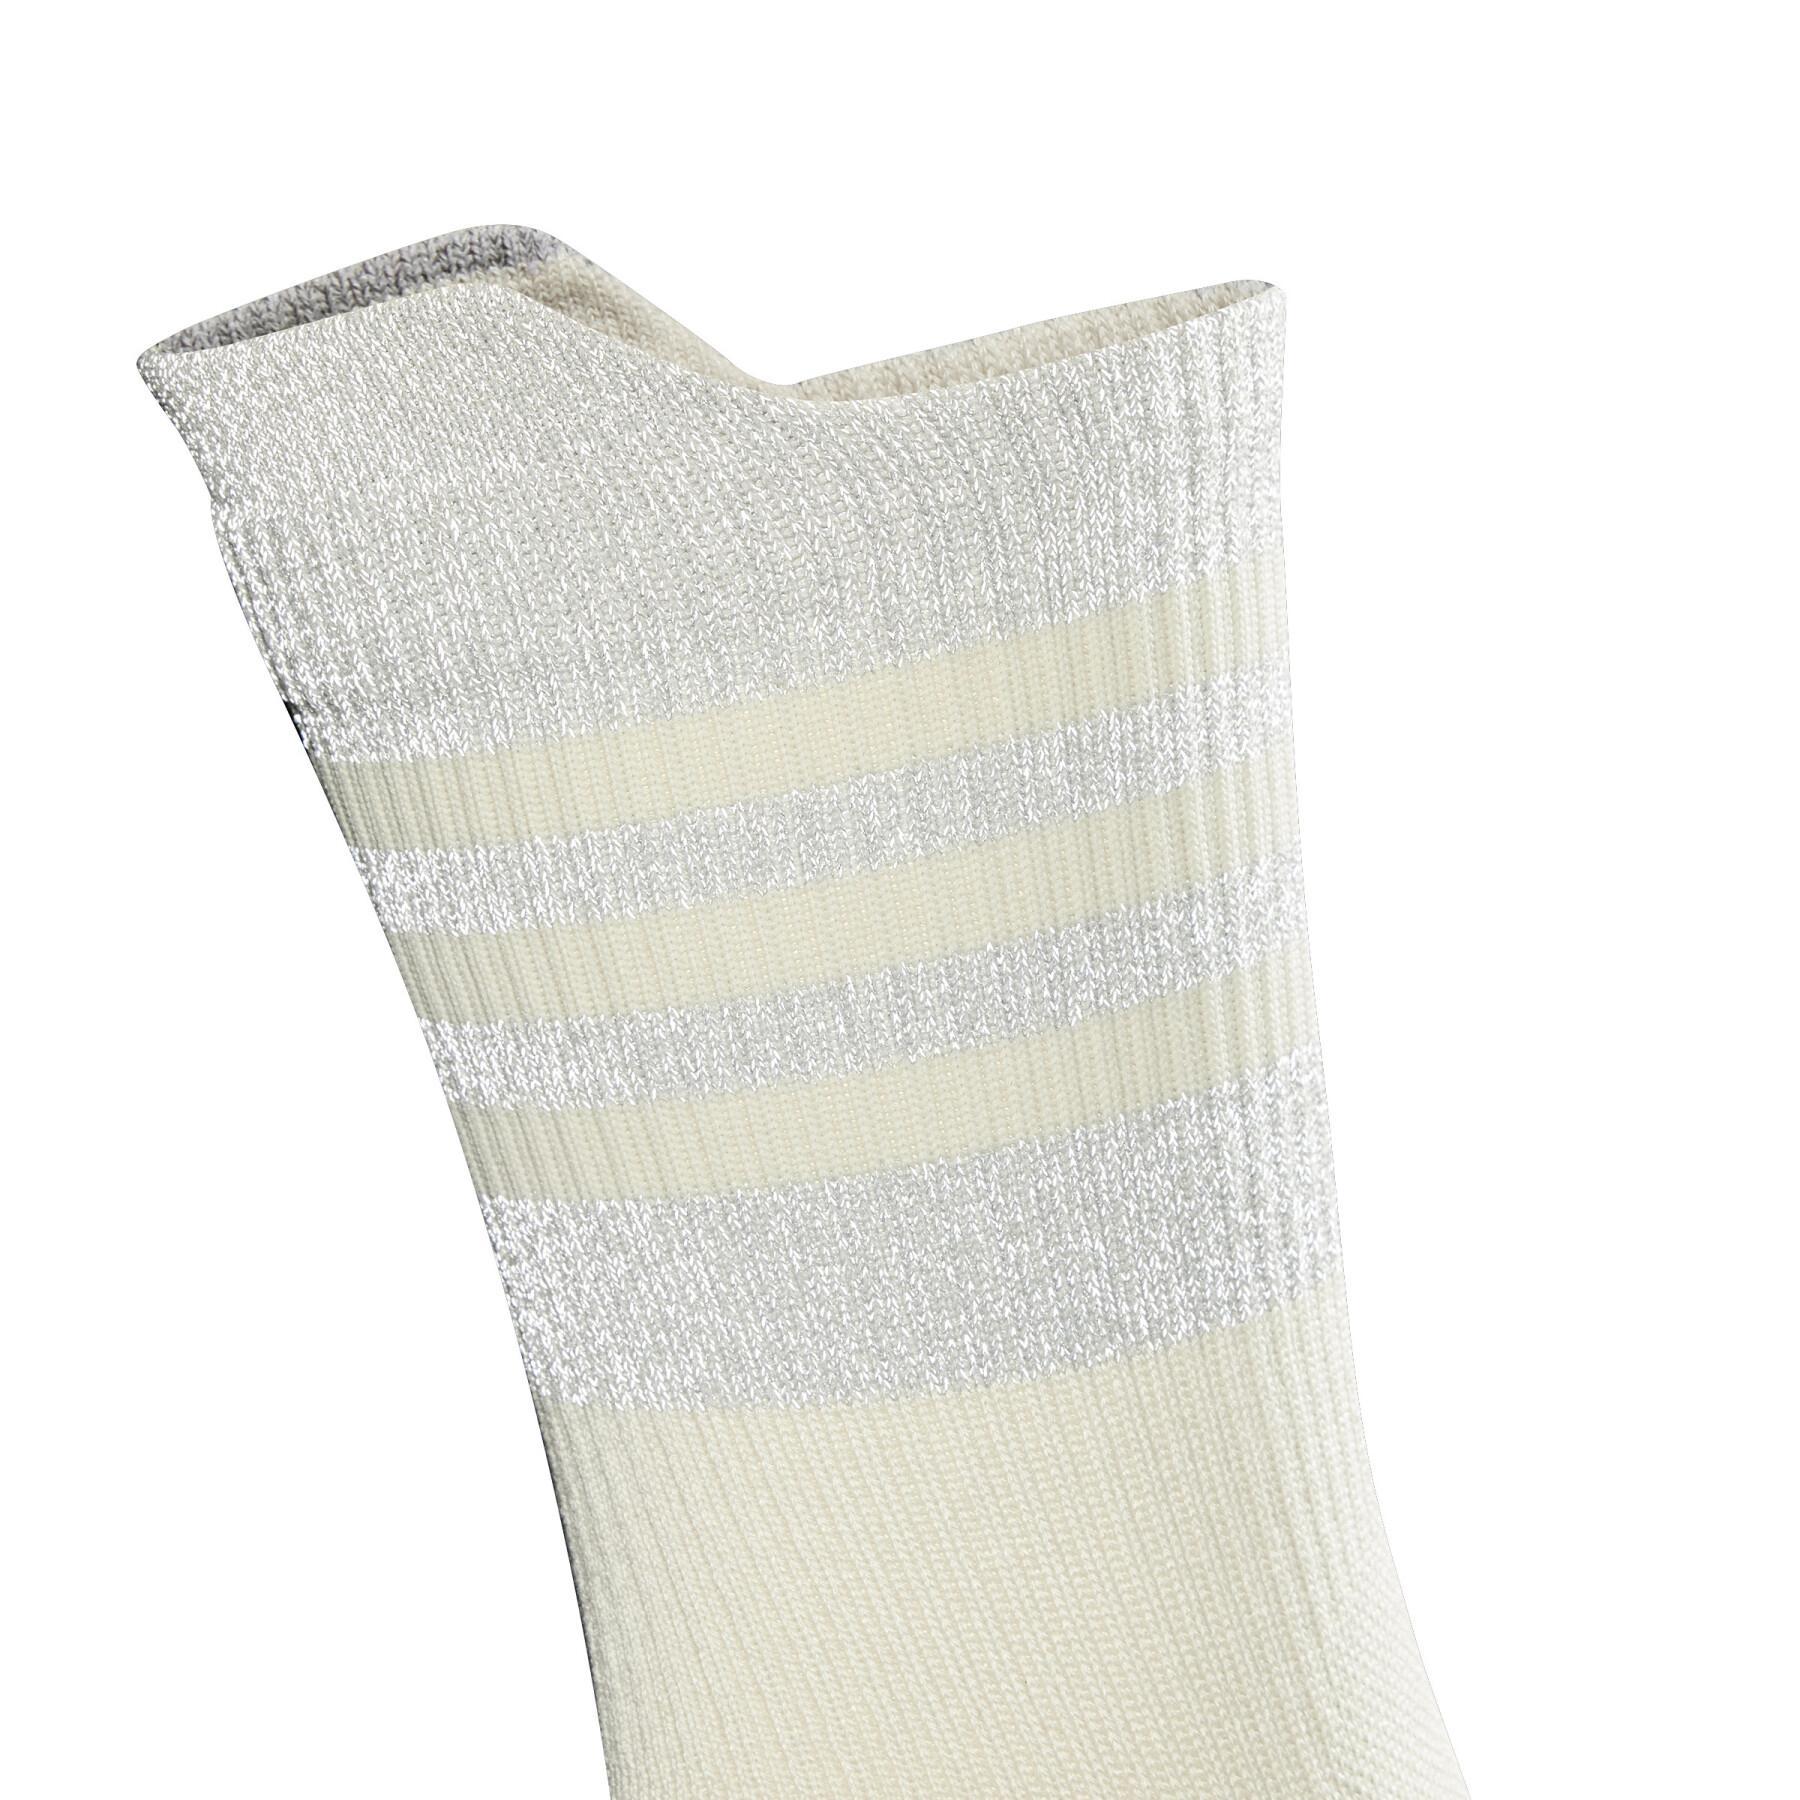 Performance reflective mid-calf running socks adidas